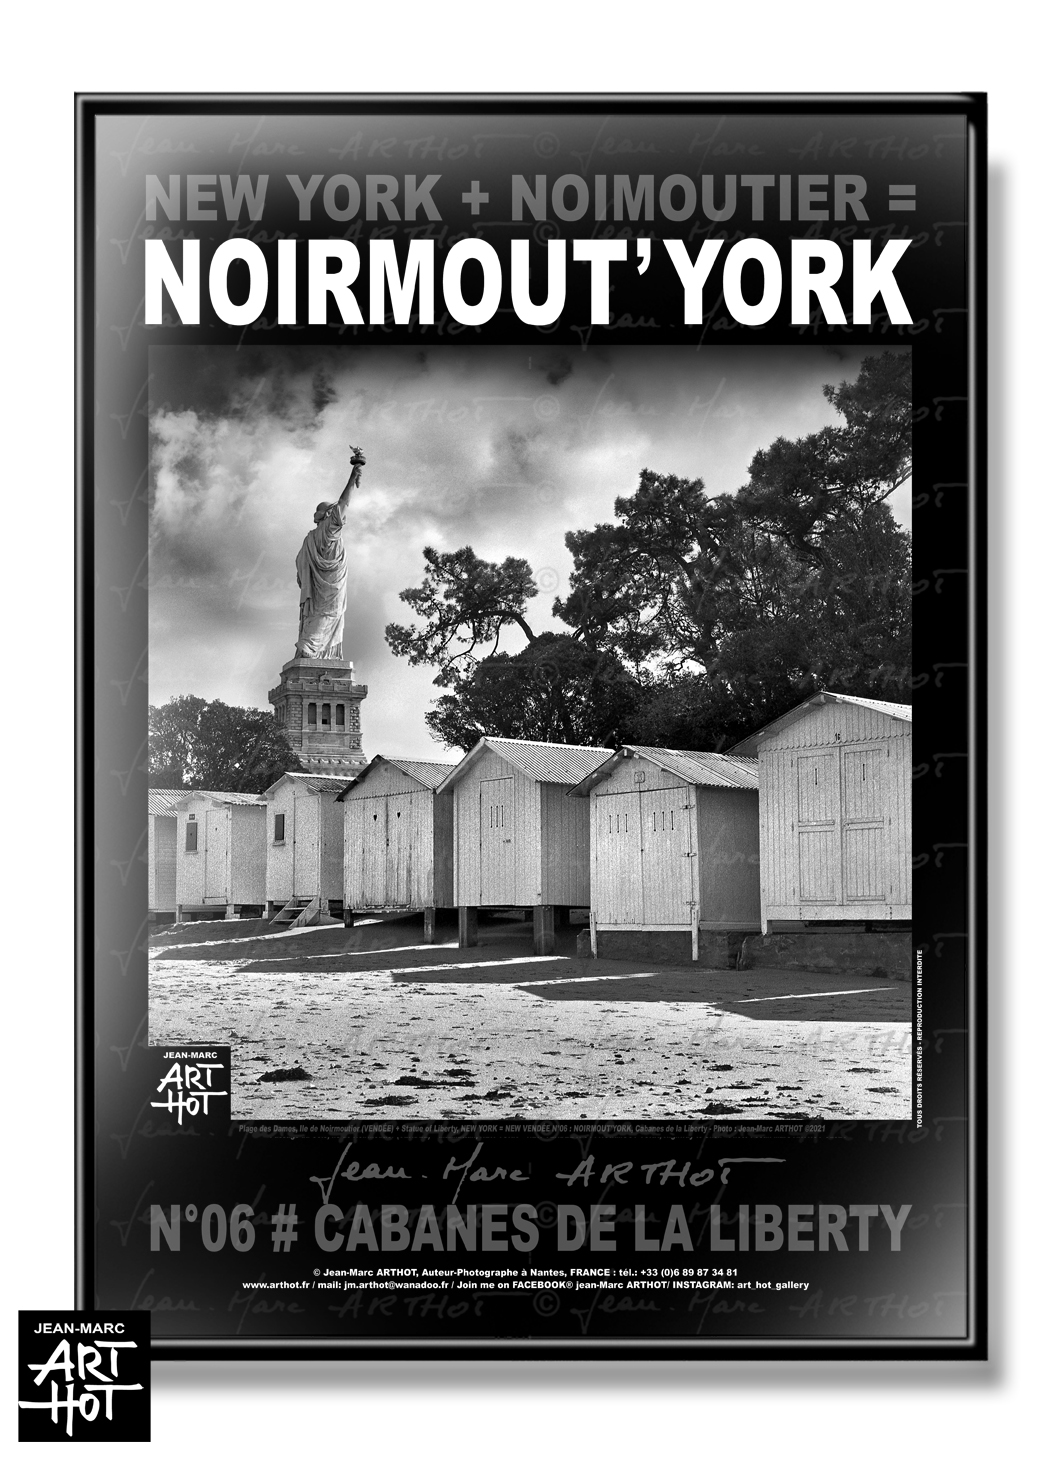 arthot-photo-art-b&w-new-york-vendee-newvendee-006-1-noirmout-york-ile-noirmoutier-plage-dames-cabanes-liberty-AFFICHE